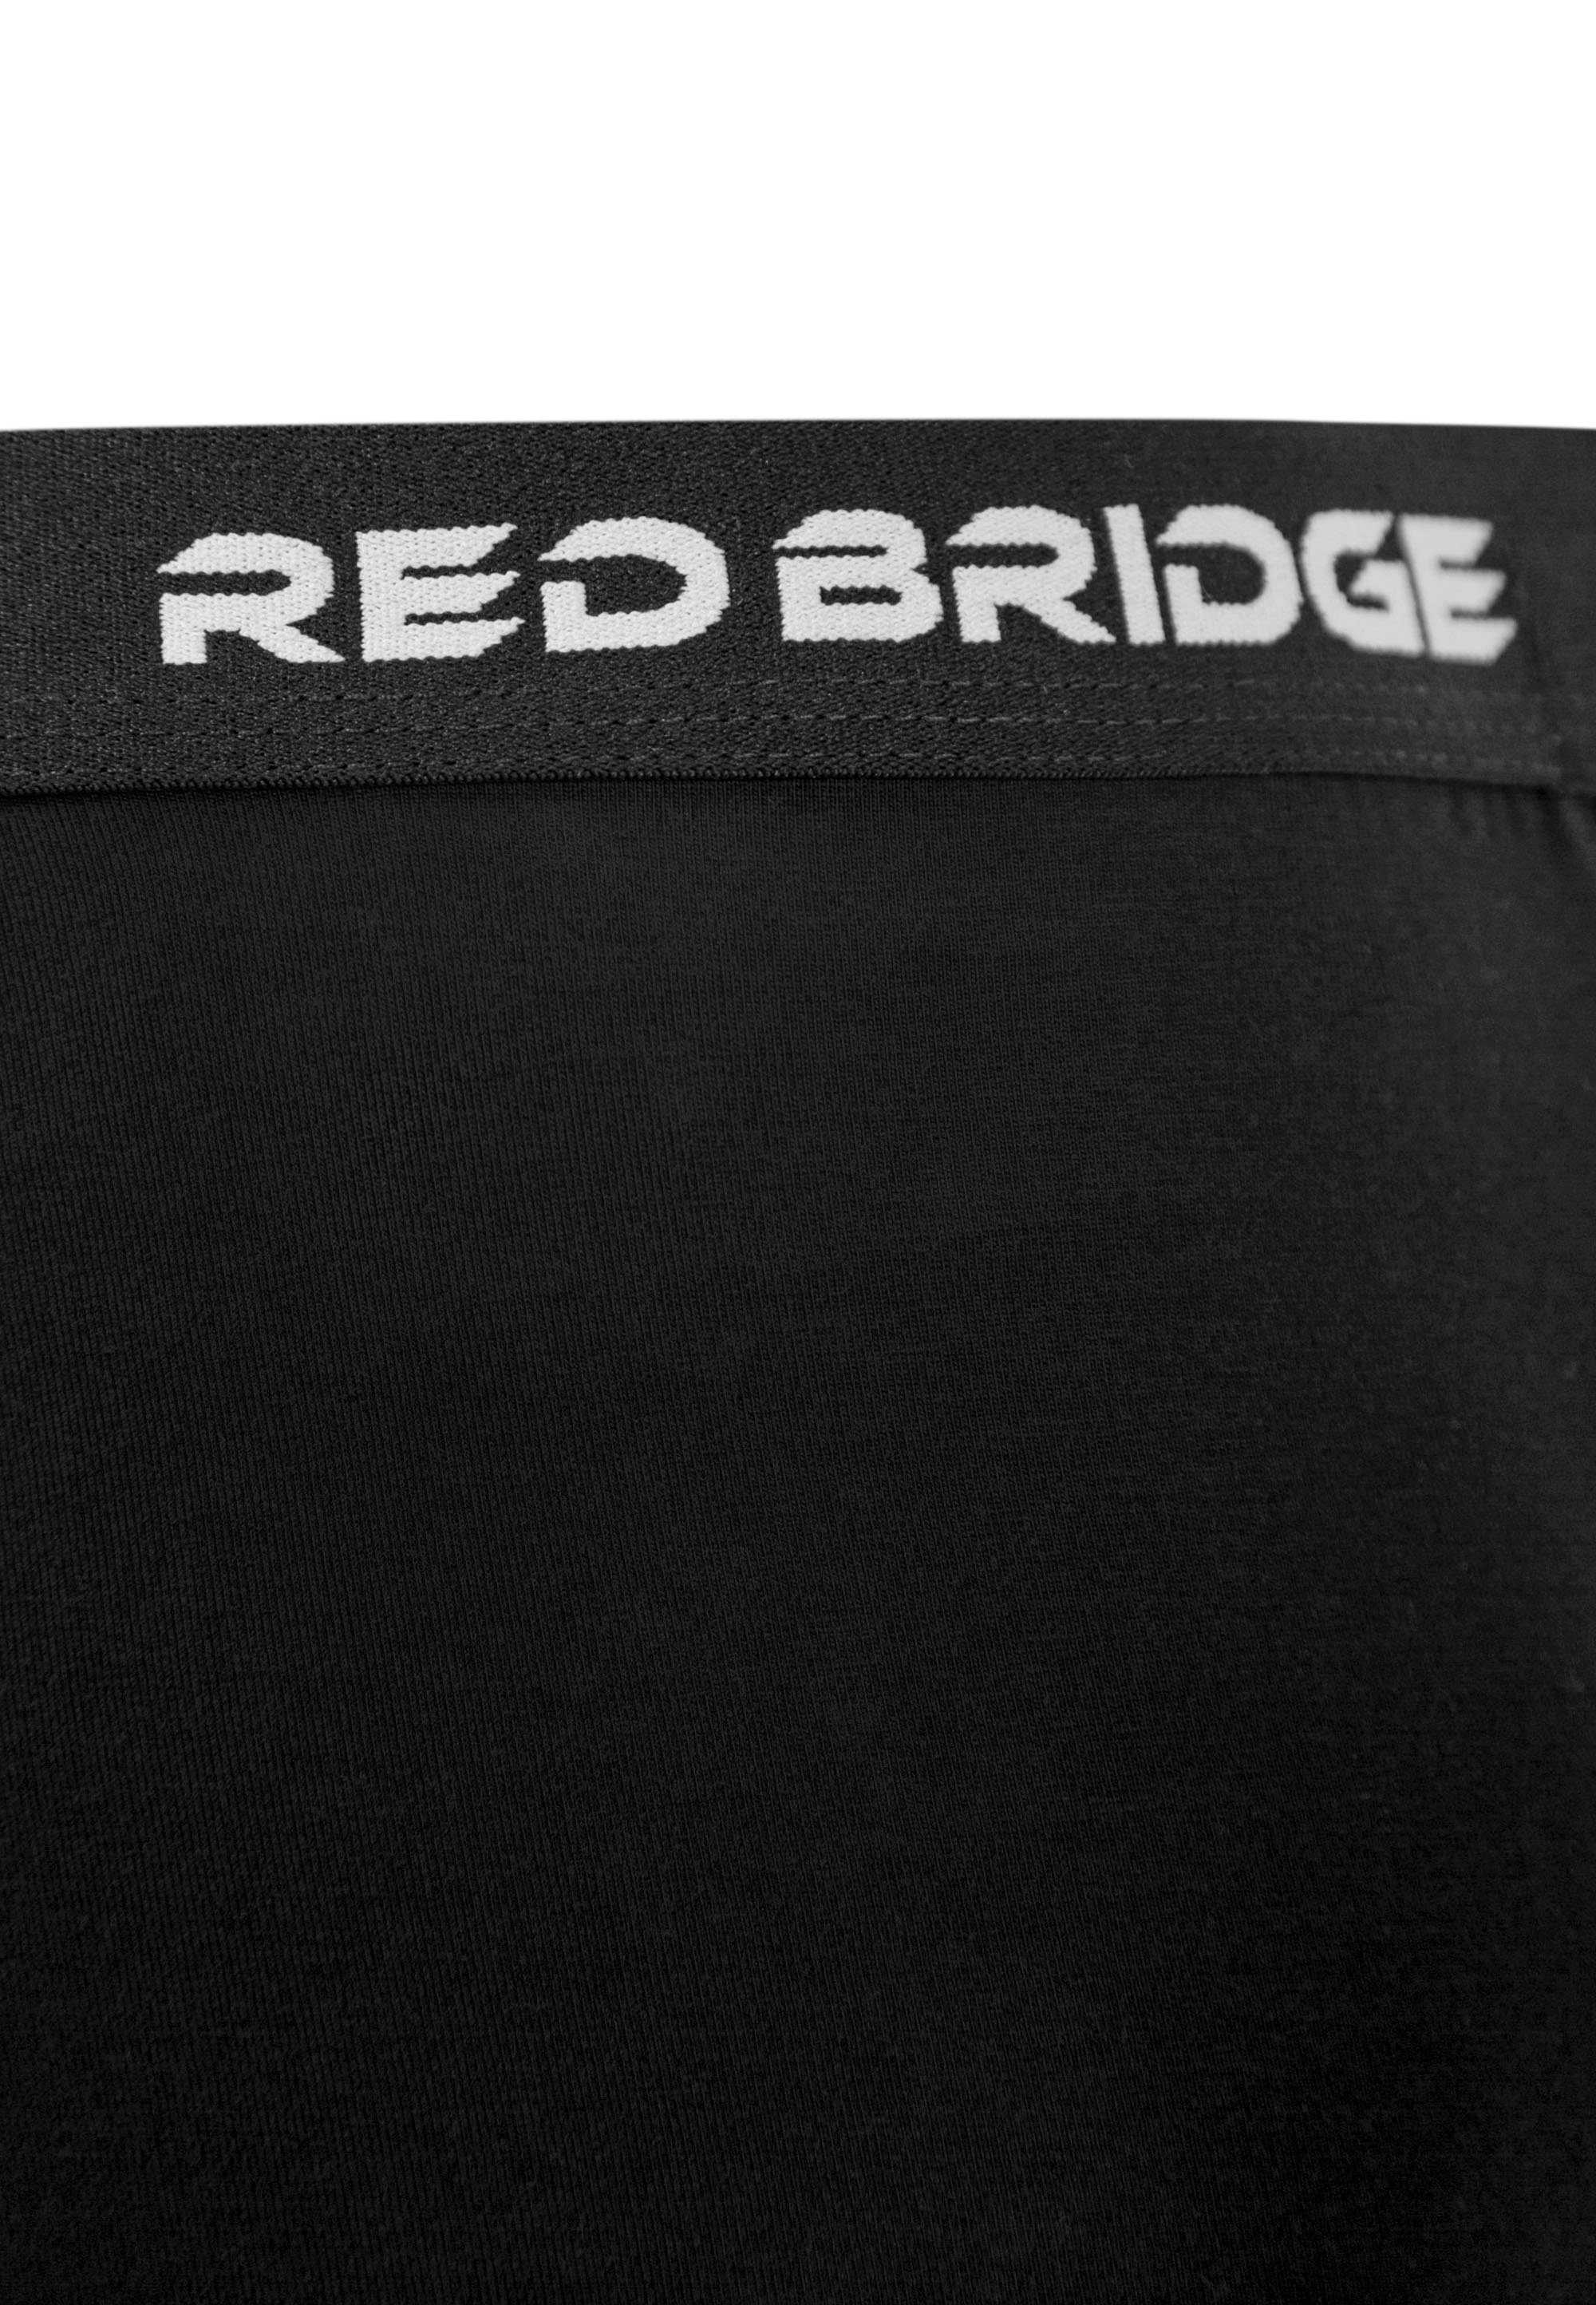 RedBridge Boxershorts Red Bridge Herren 6er-Pack) 6er Premium Qualität Boxershorts Packung Schwarz (Spar-Pack